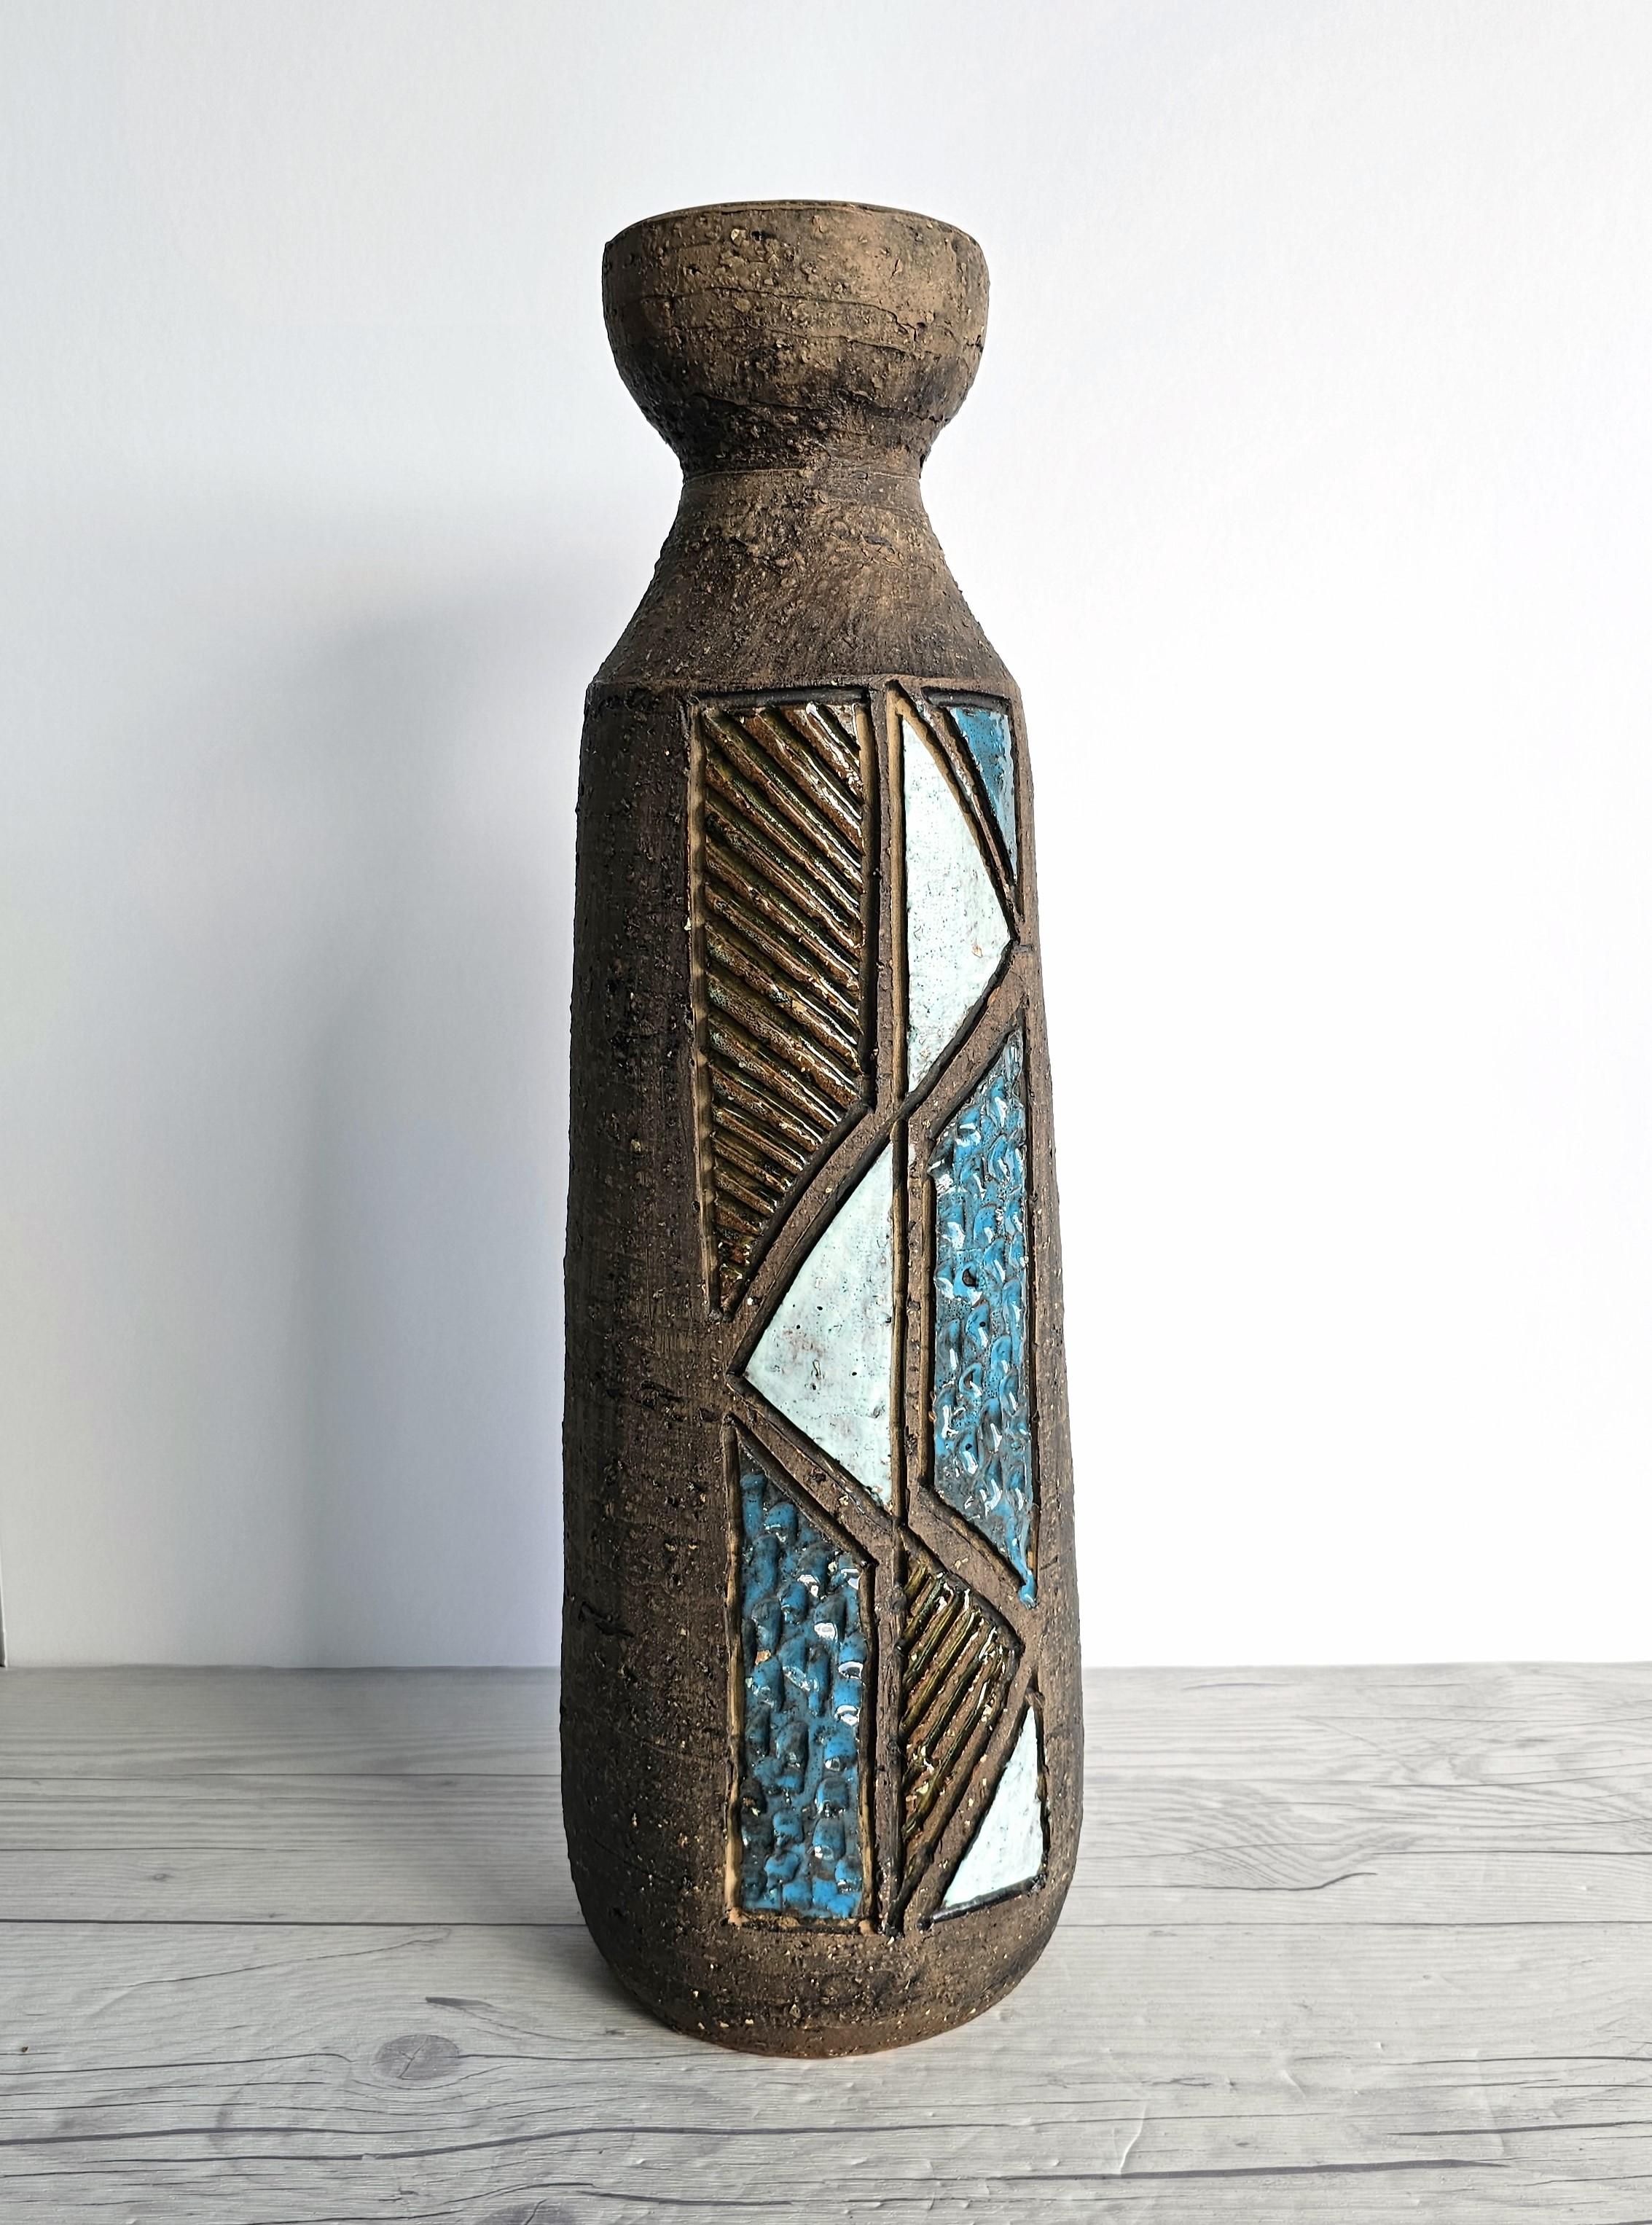 Tilgmans Keramik, Swedish Midcentury Modernist Sgraffito Sculptural Bottle Vase In Good Condition For Sale In Frome, GB